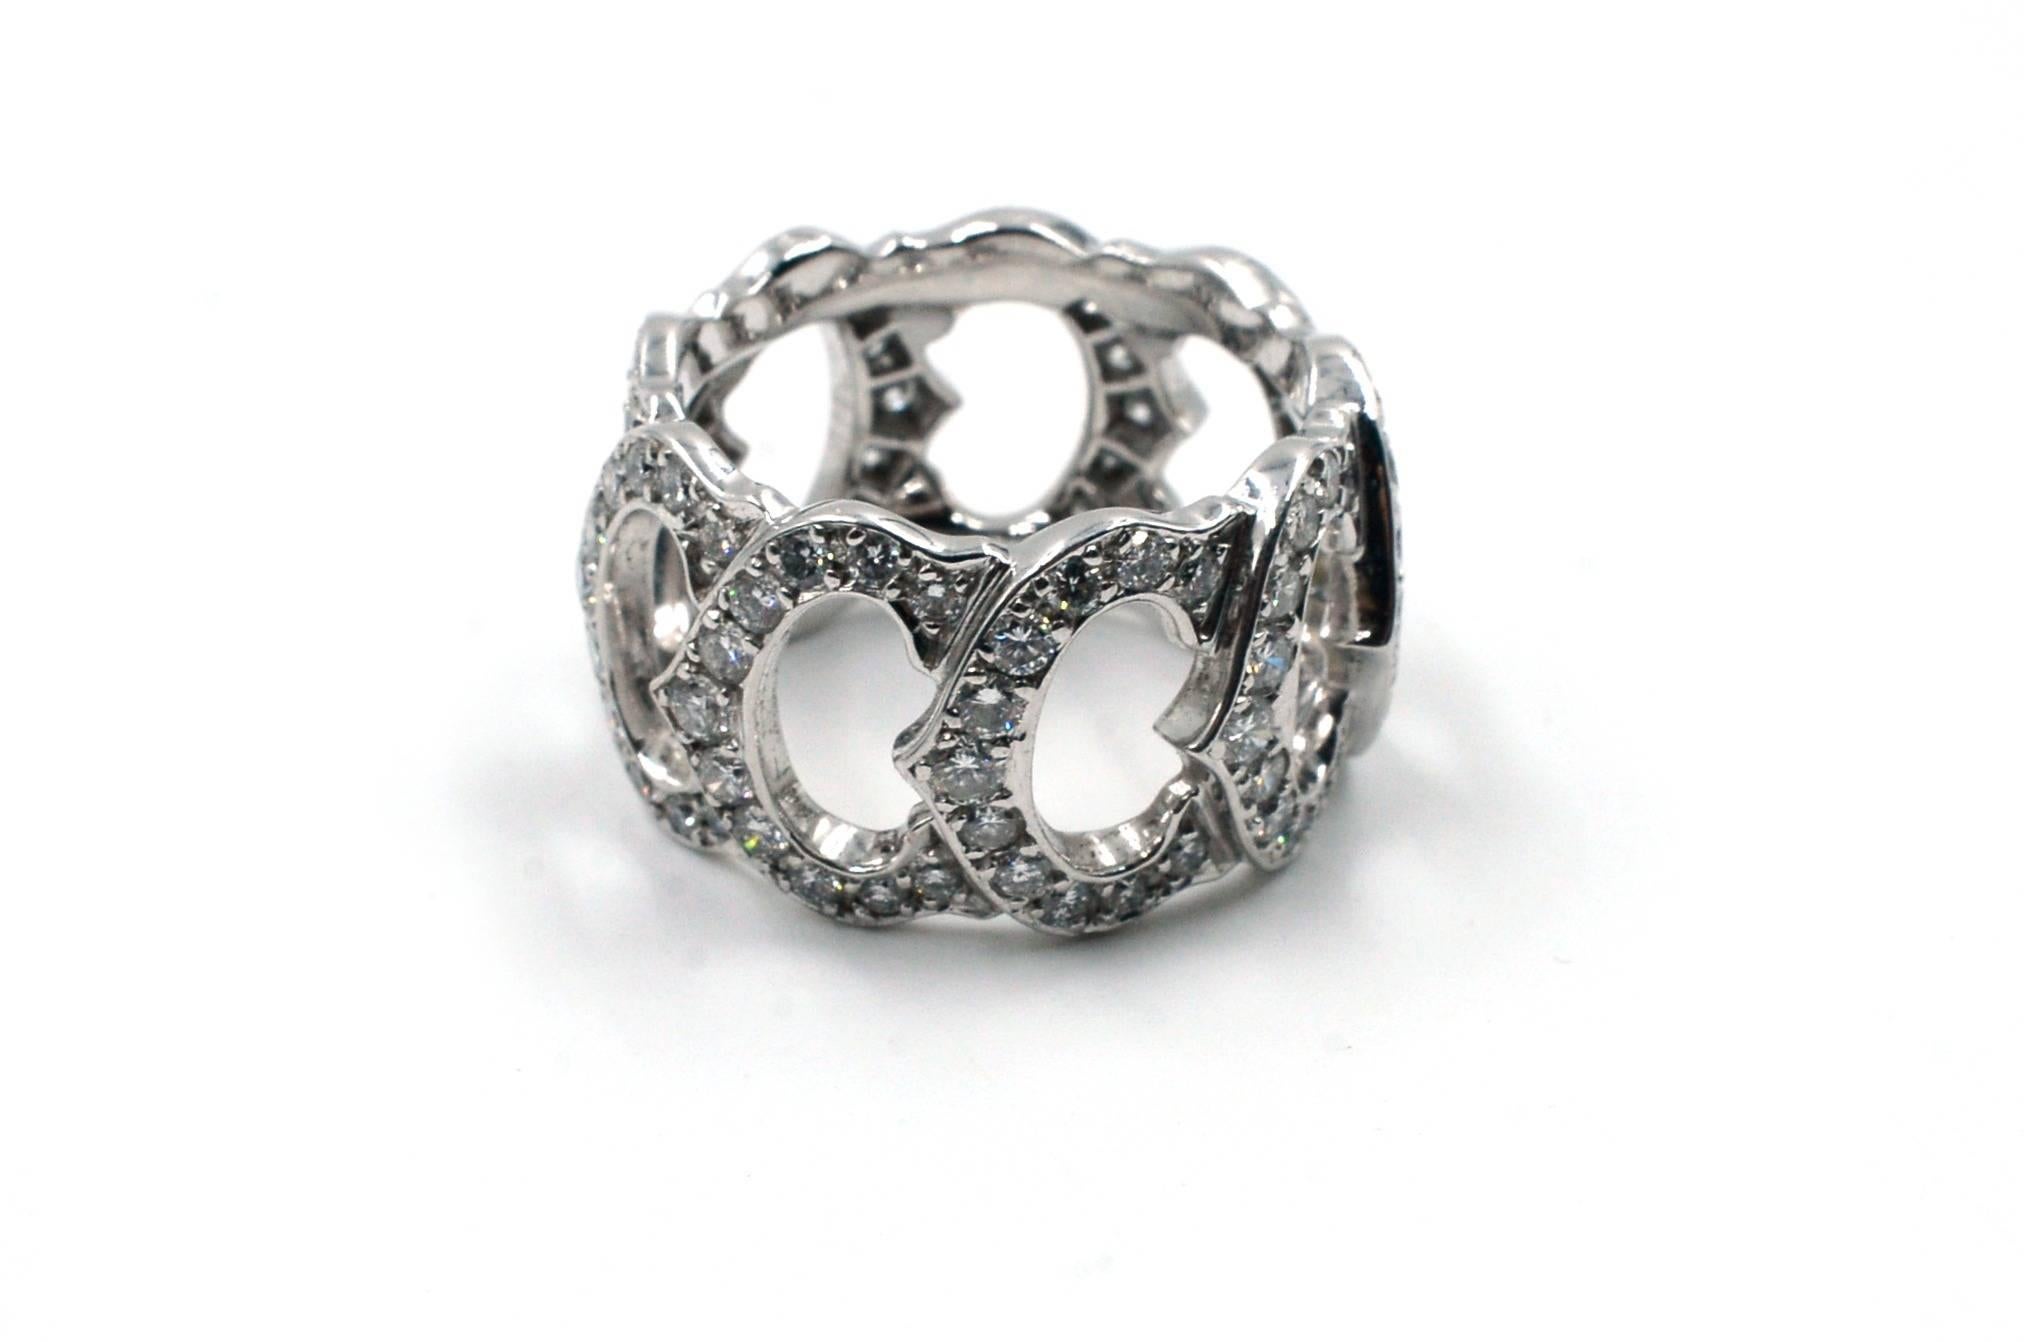 Brand: Cartier

Stones: Diamond 

Model: C de Cartier

Metal: 18k White Gold Ring

Diamonds: F-VS1 3.00ct

Hallmarked: Cartier 750 54 8766**

Ring Size: 54

